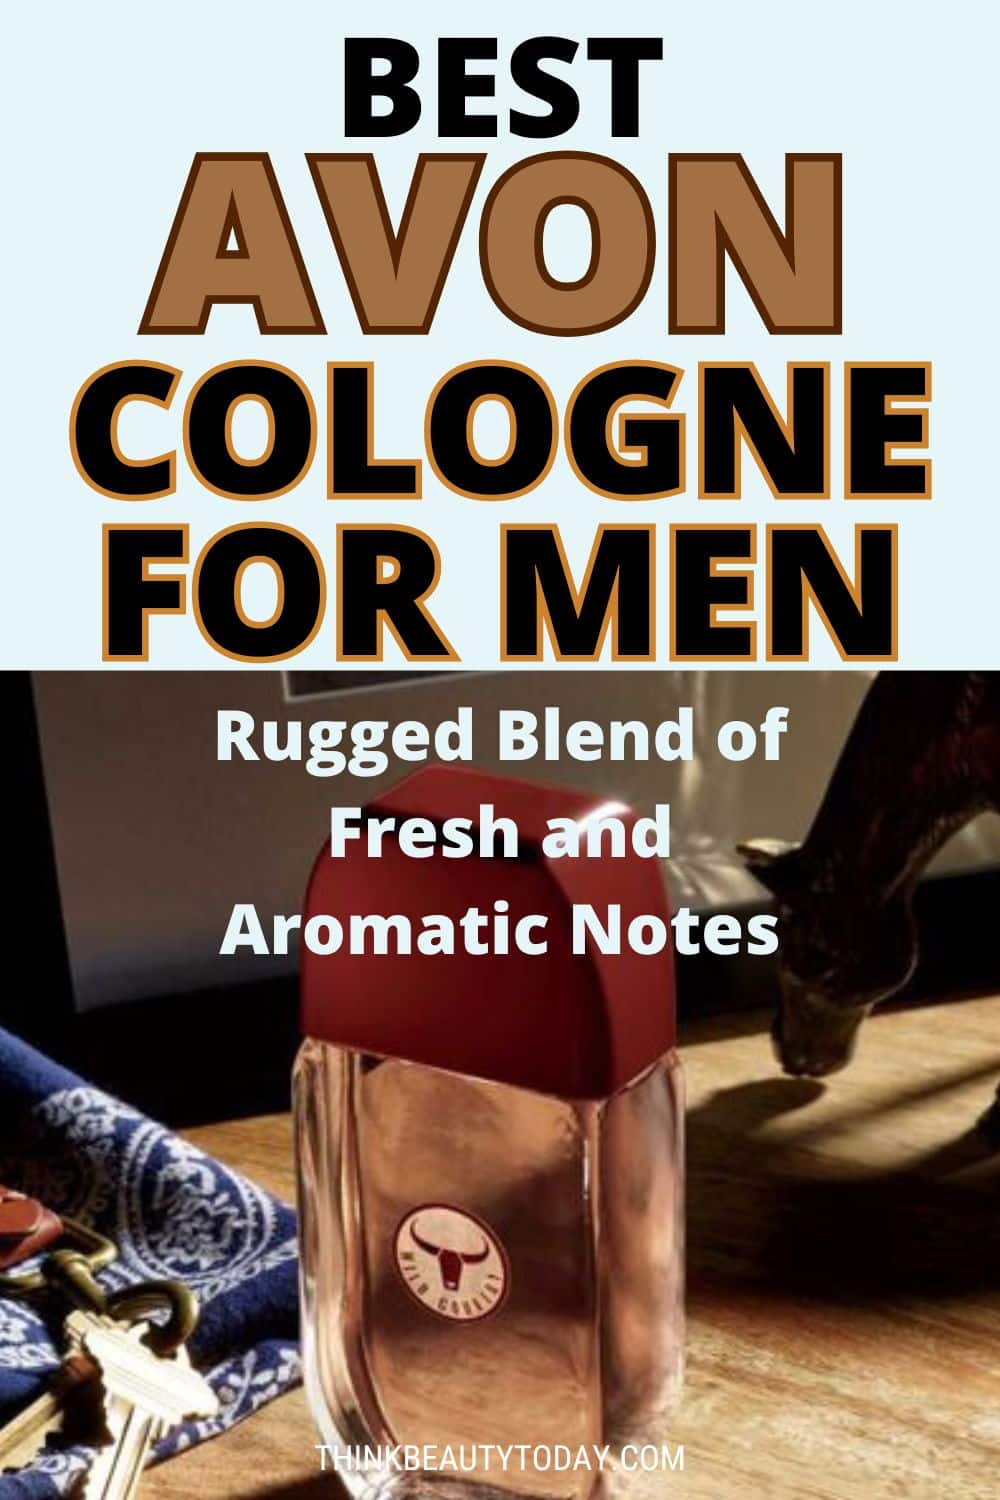 Avon Men's Cologne